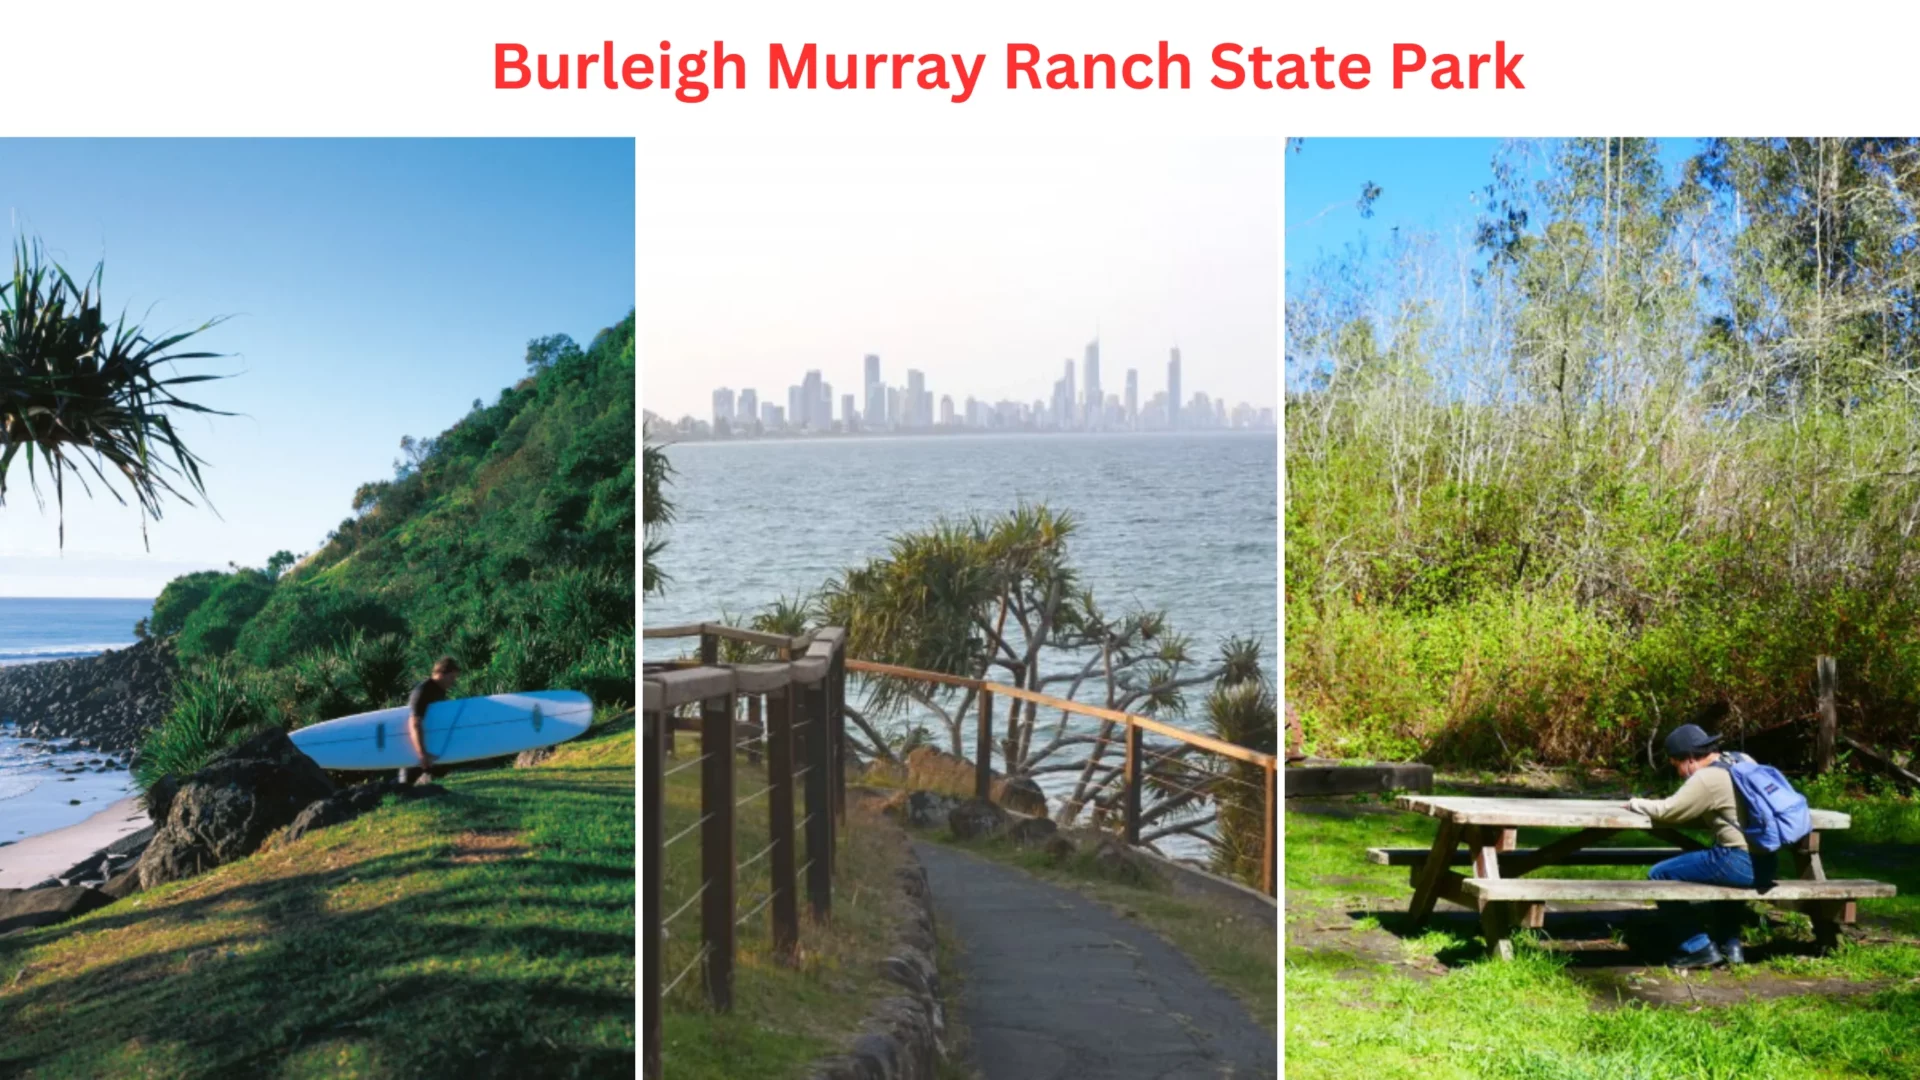 Burleigh Murray Ranch State Park